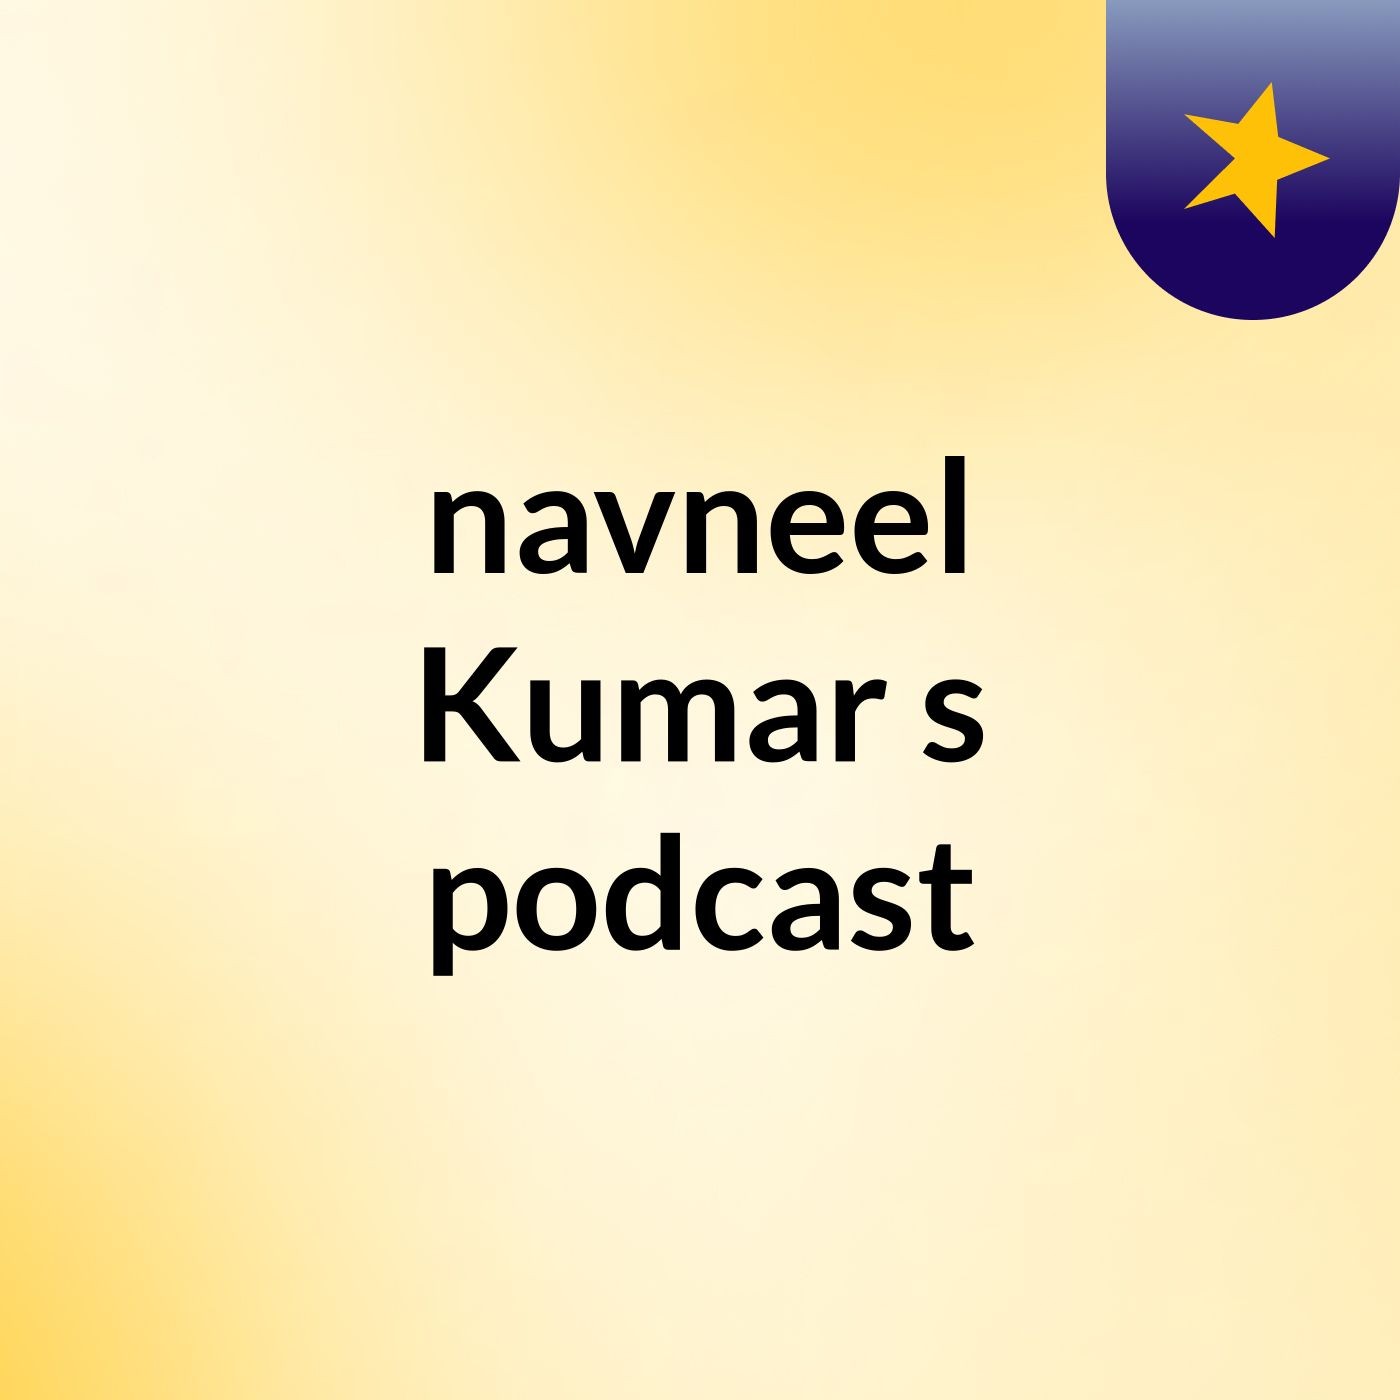 Episode 3 - navneel Kumar's podcast